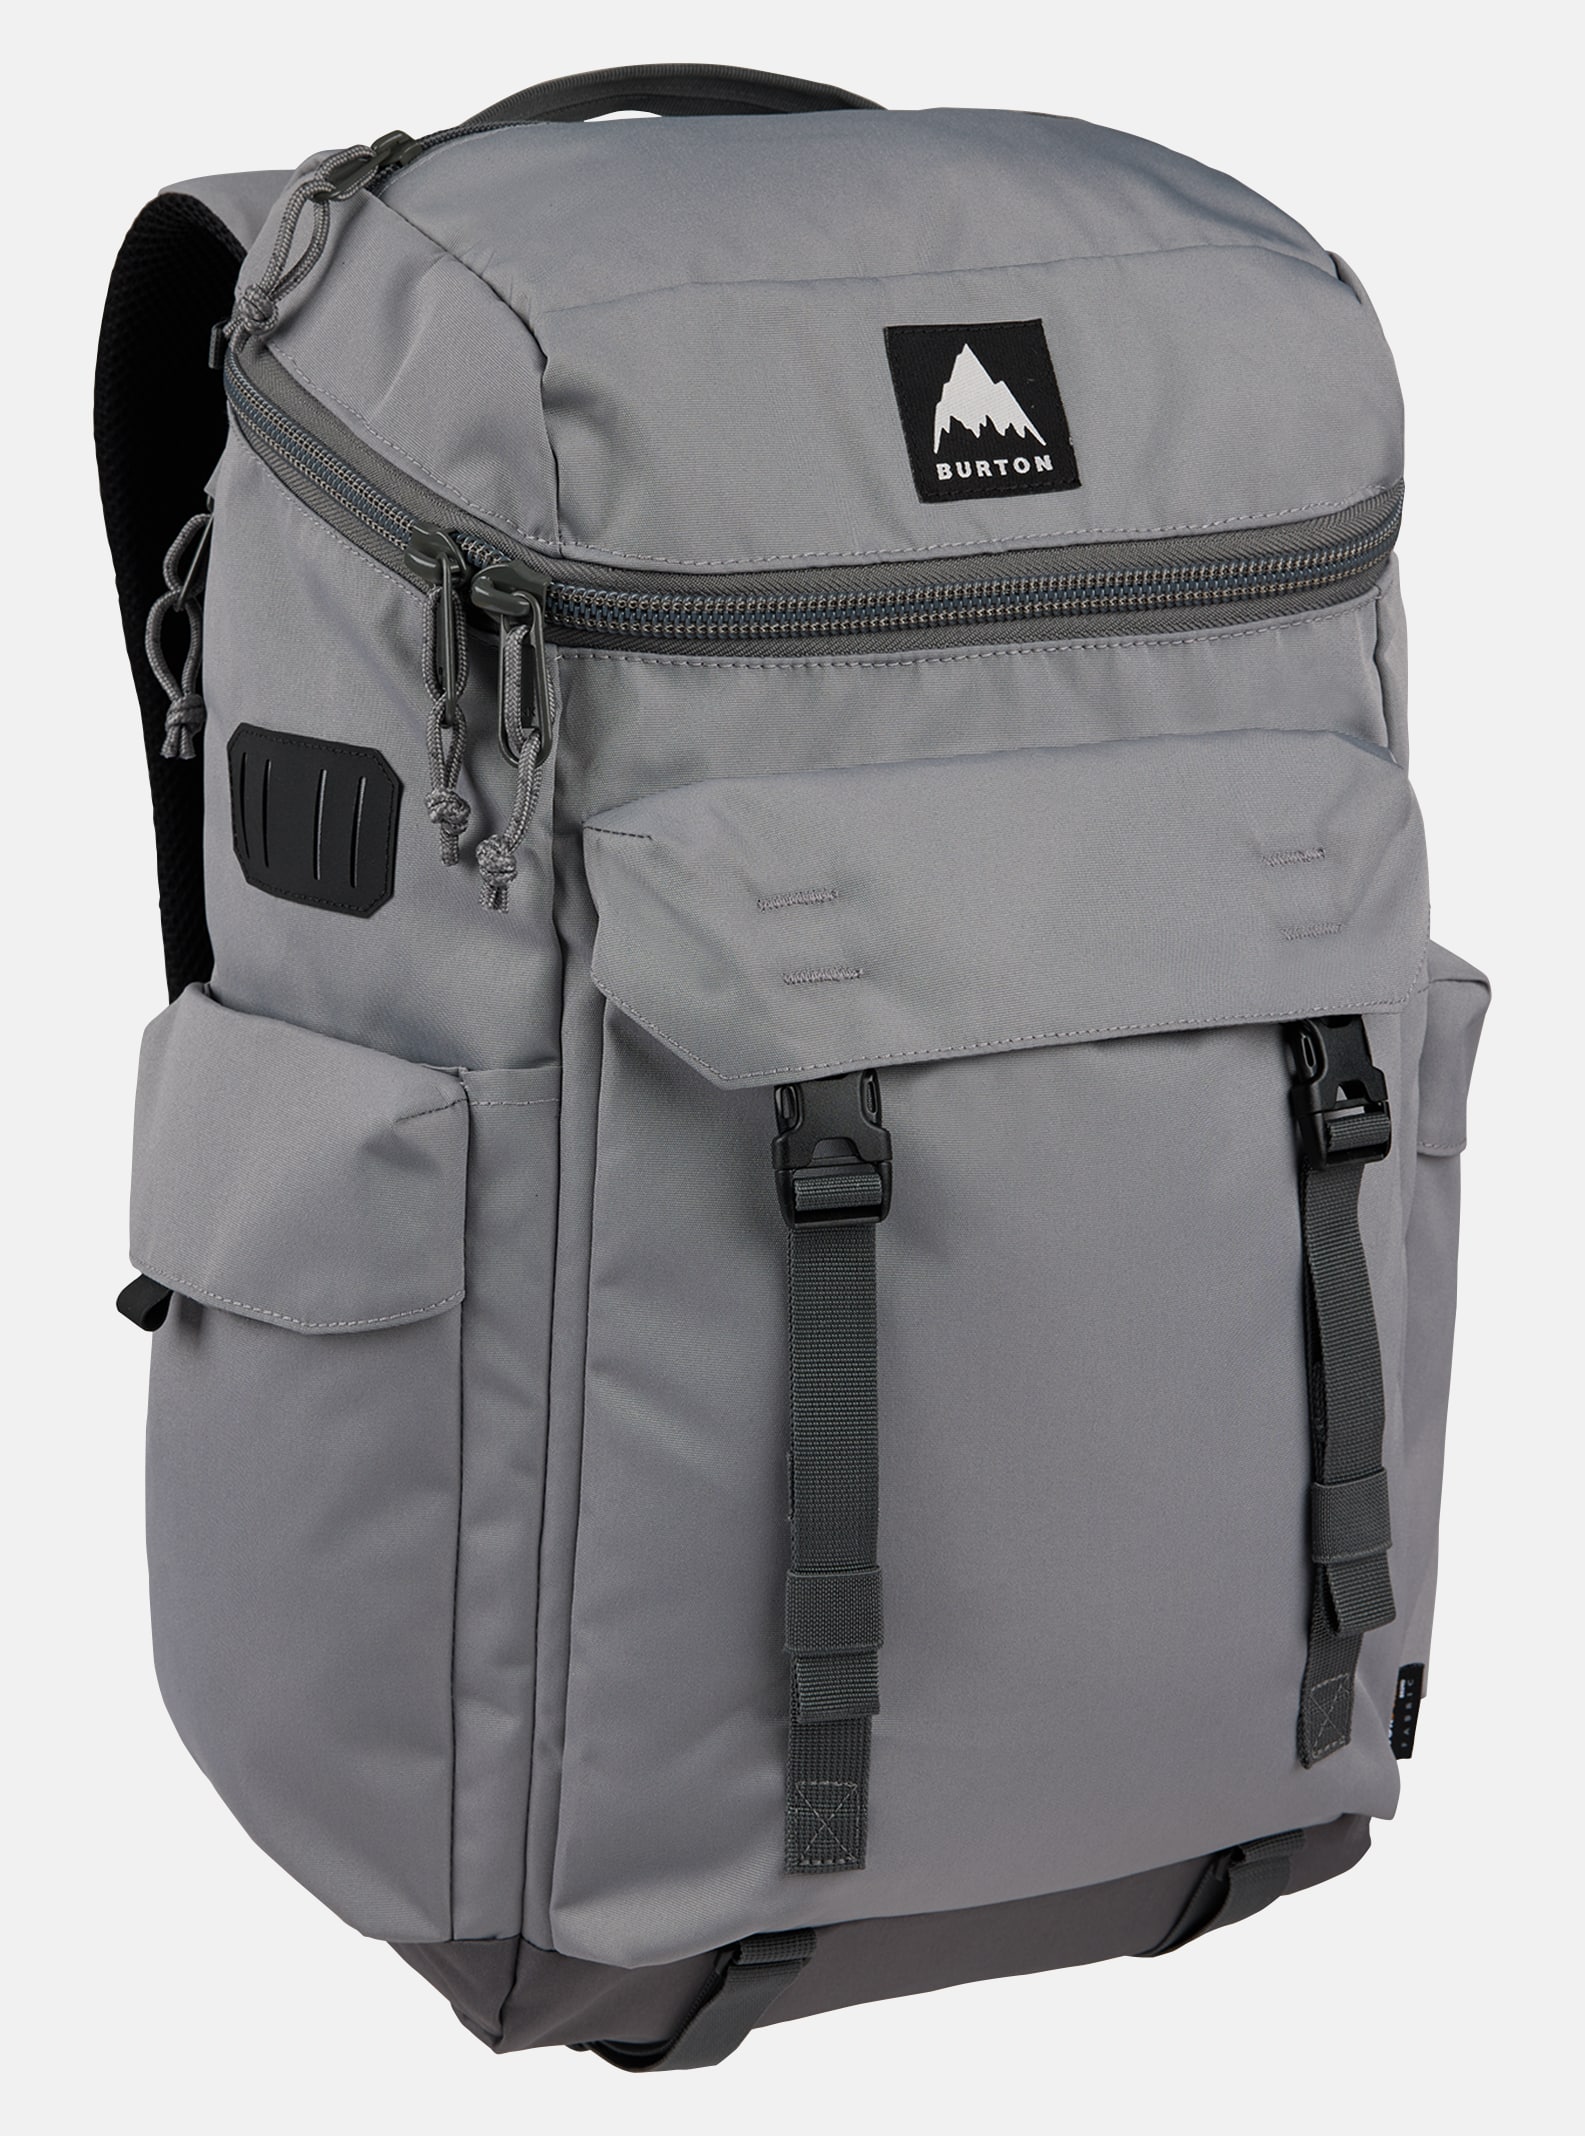 Annex 2.0 28L Backpack | Burton.com Winter 2023 US